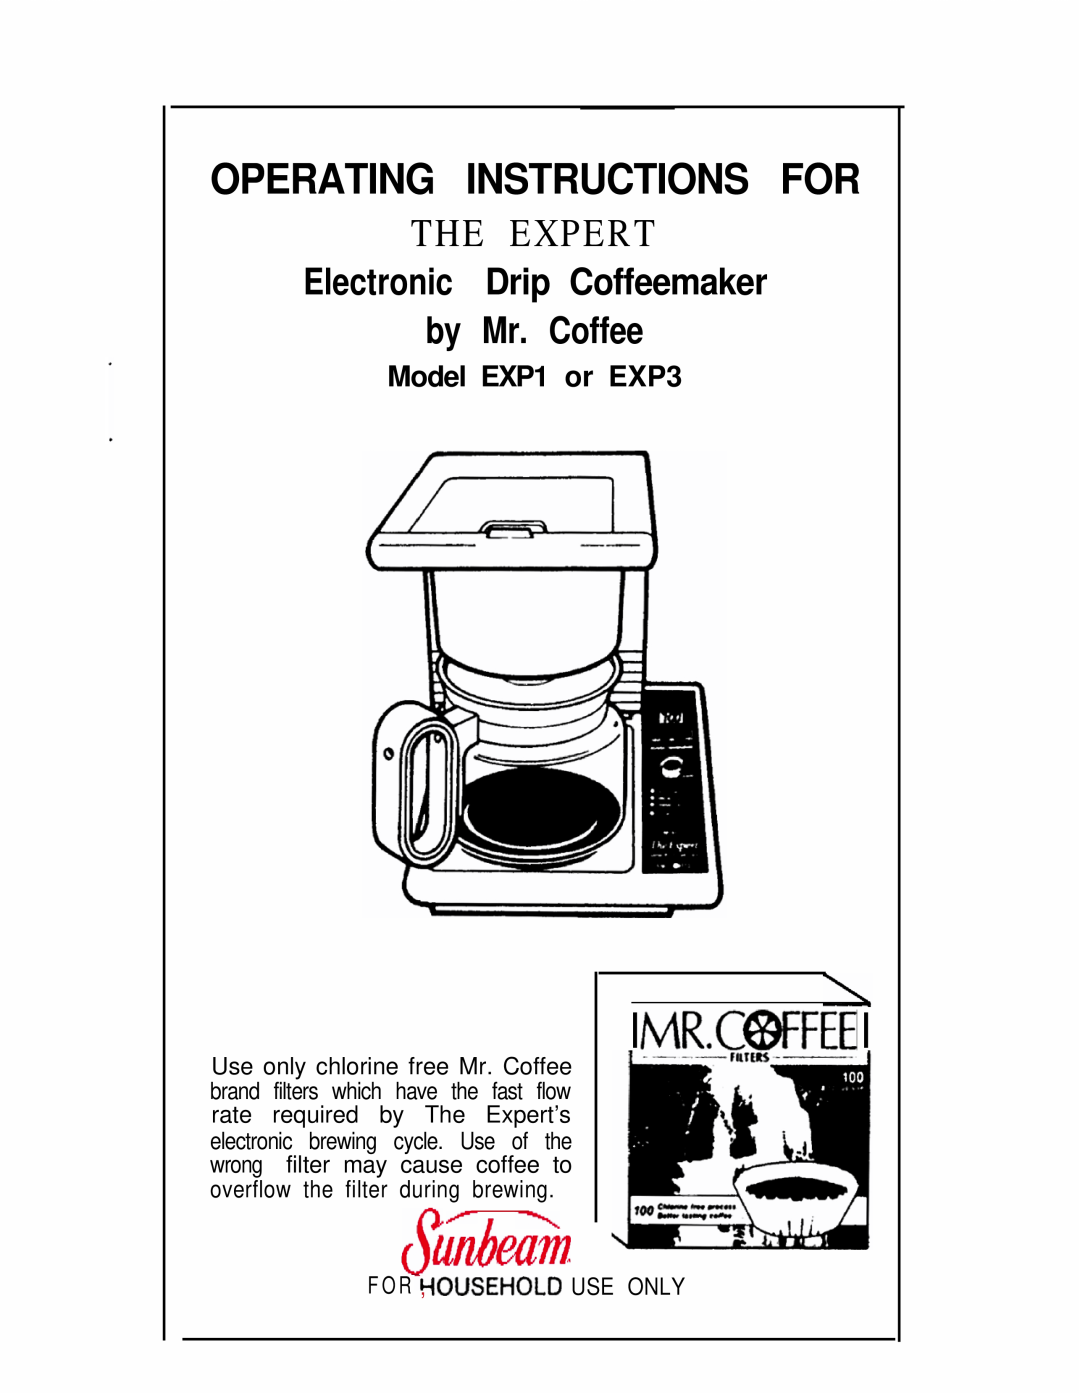 Mr. Coffee operating instructions Imr.C~Fee, Operating Instructions For, The Expert, Model EXP1 or EXP3 